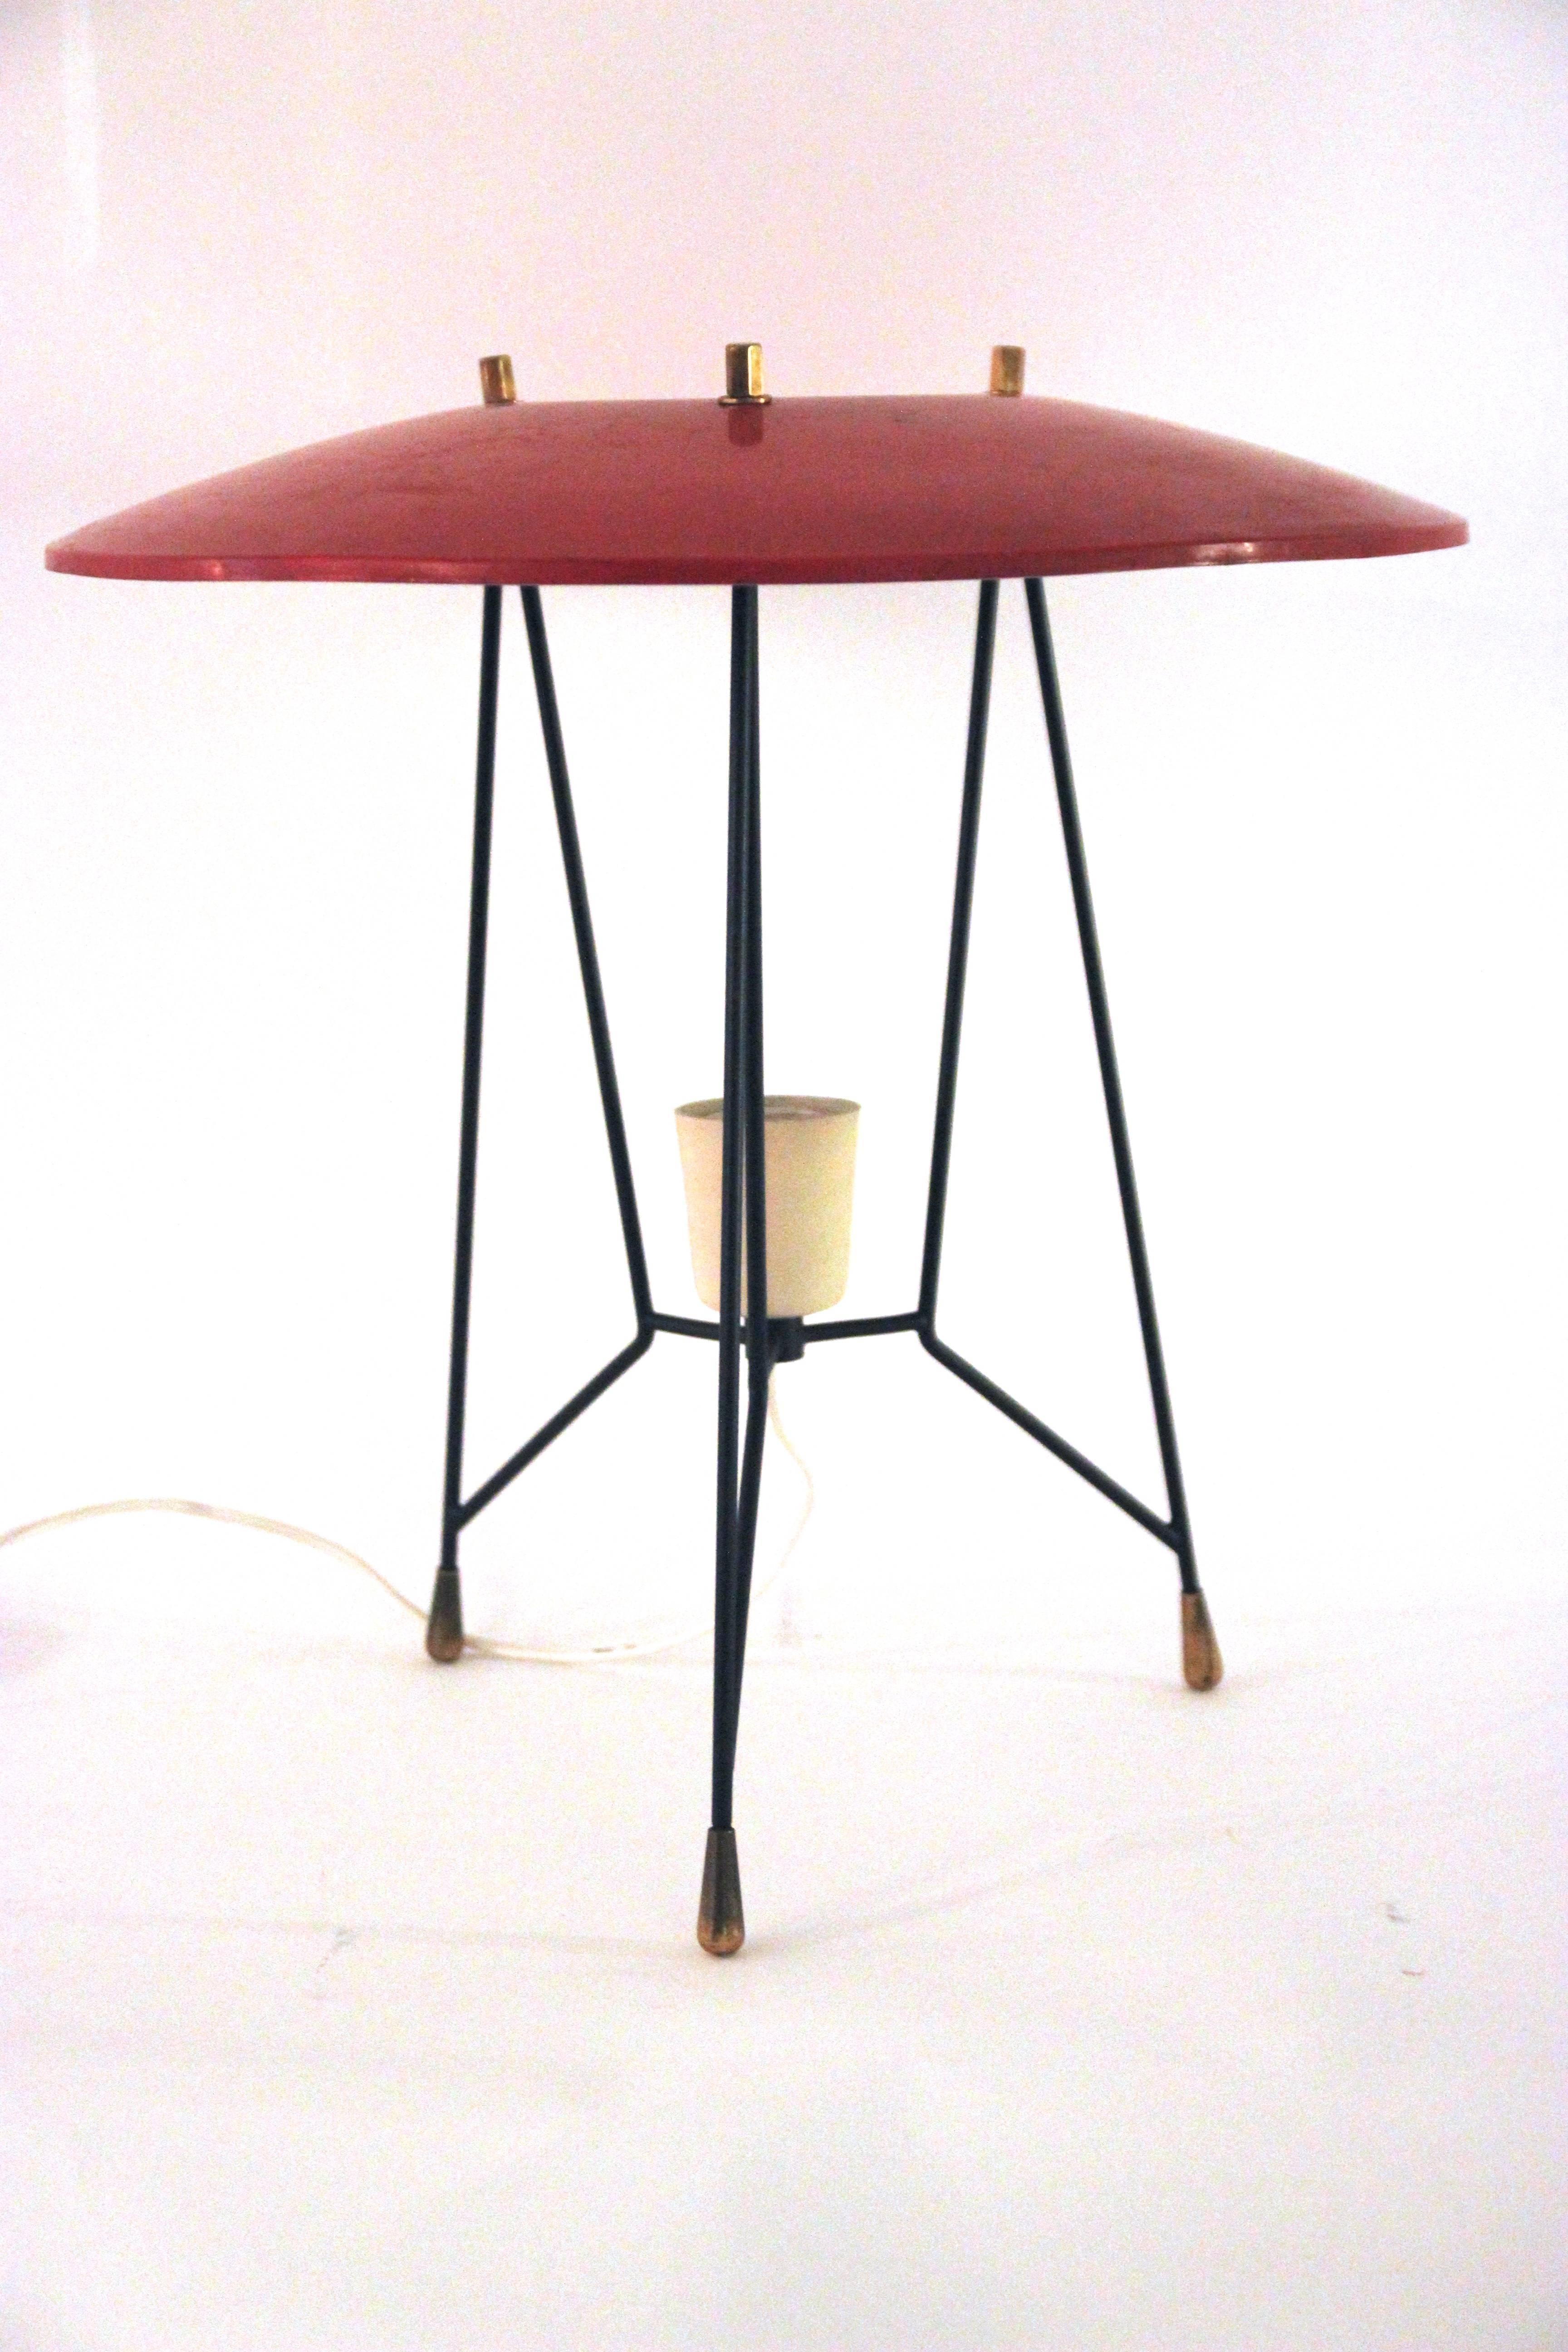 Stilnovo,
table lamp,
brass, varnished steel and lacquered aluminium.
Original Stilnovo label,
circa 1950, Italy.
Measures: Height 40 cm, diameter 38 cm.